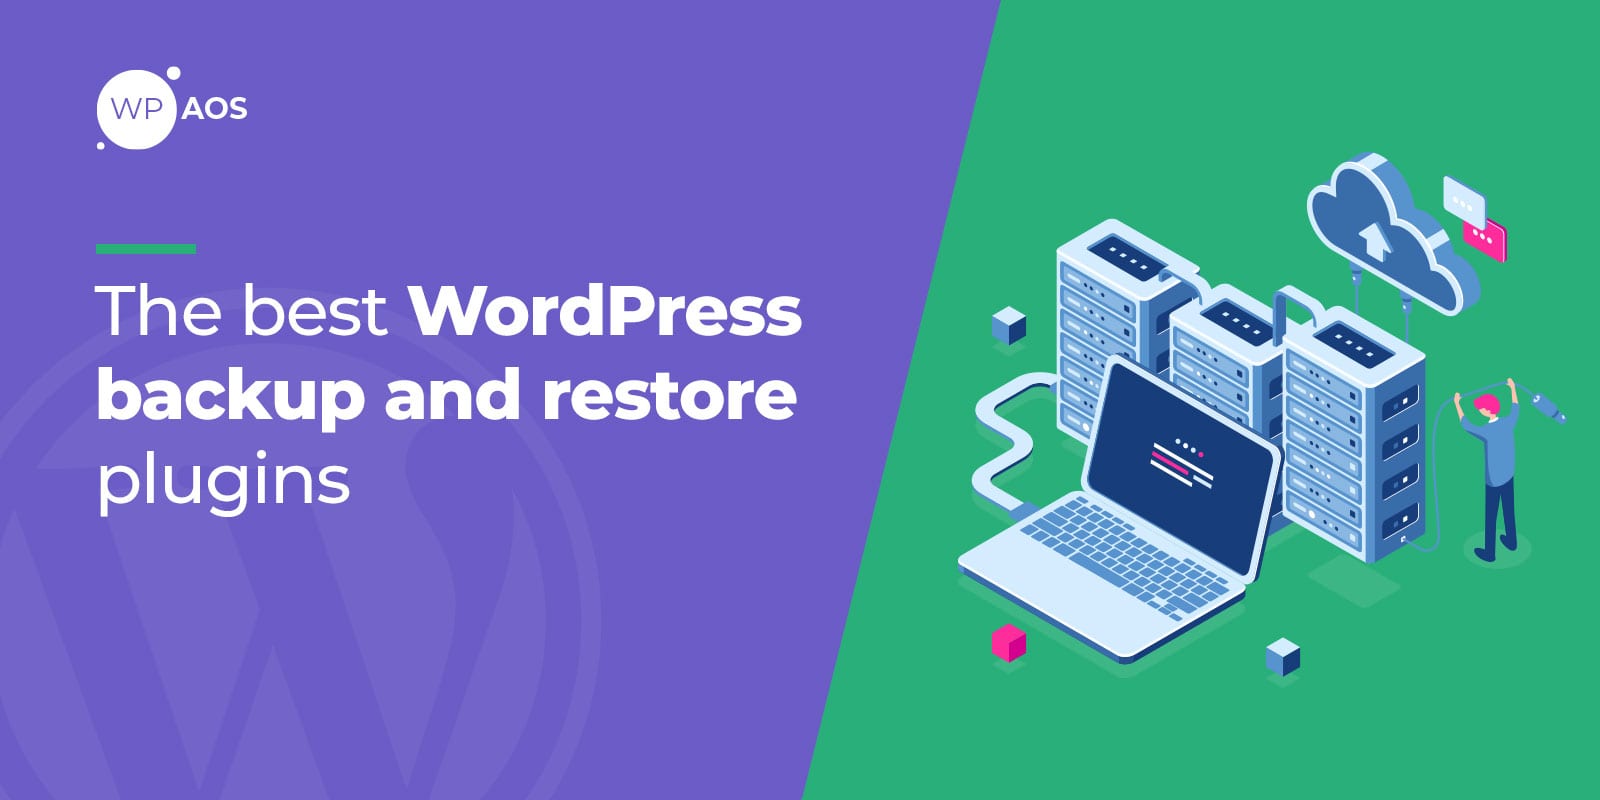 WordPress Backup And Restore Plugins, woocommerce, wpaos, website maintenance